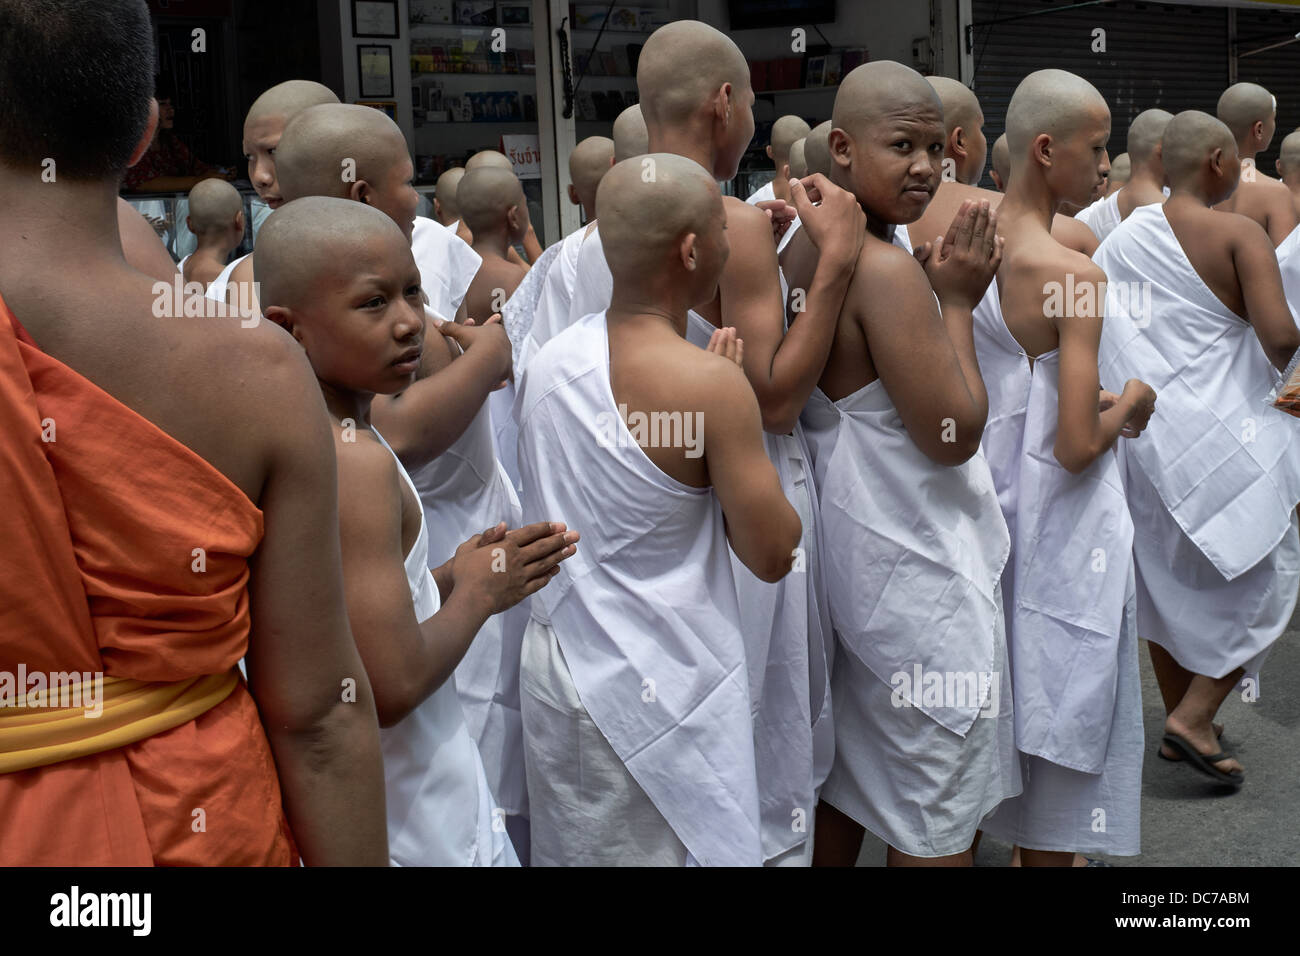 Thailand boy Monks. Buddhist novice monks parading through the street en-route to their ordination ceremony. Thailand S. E. Asia. Stock Photo